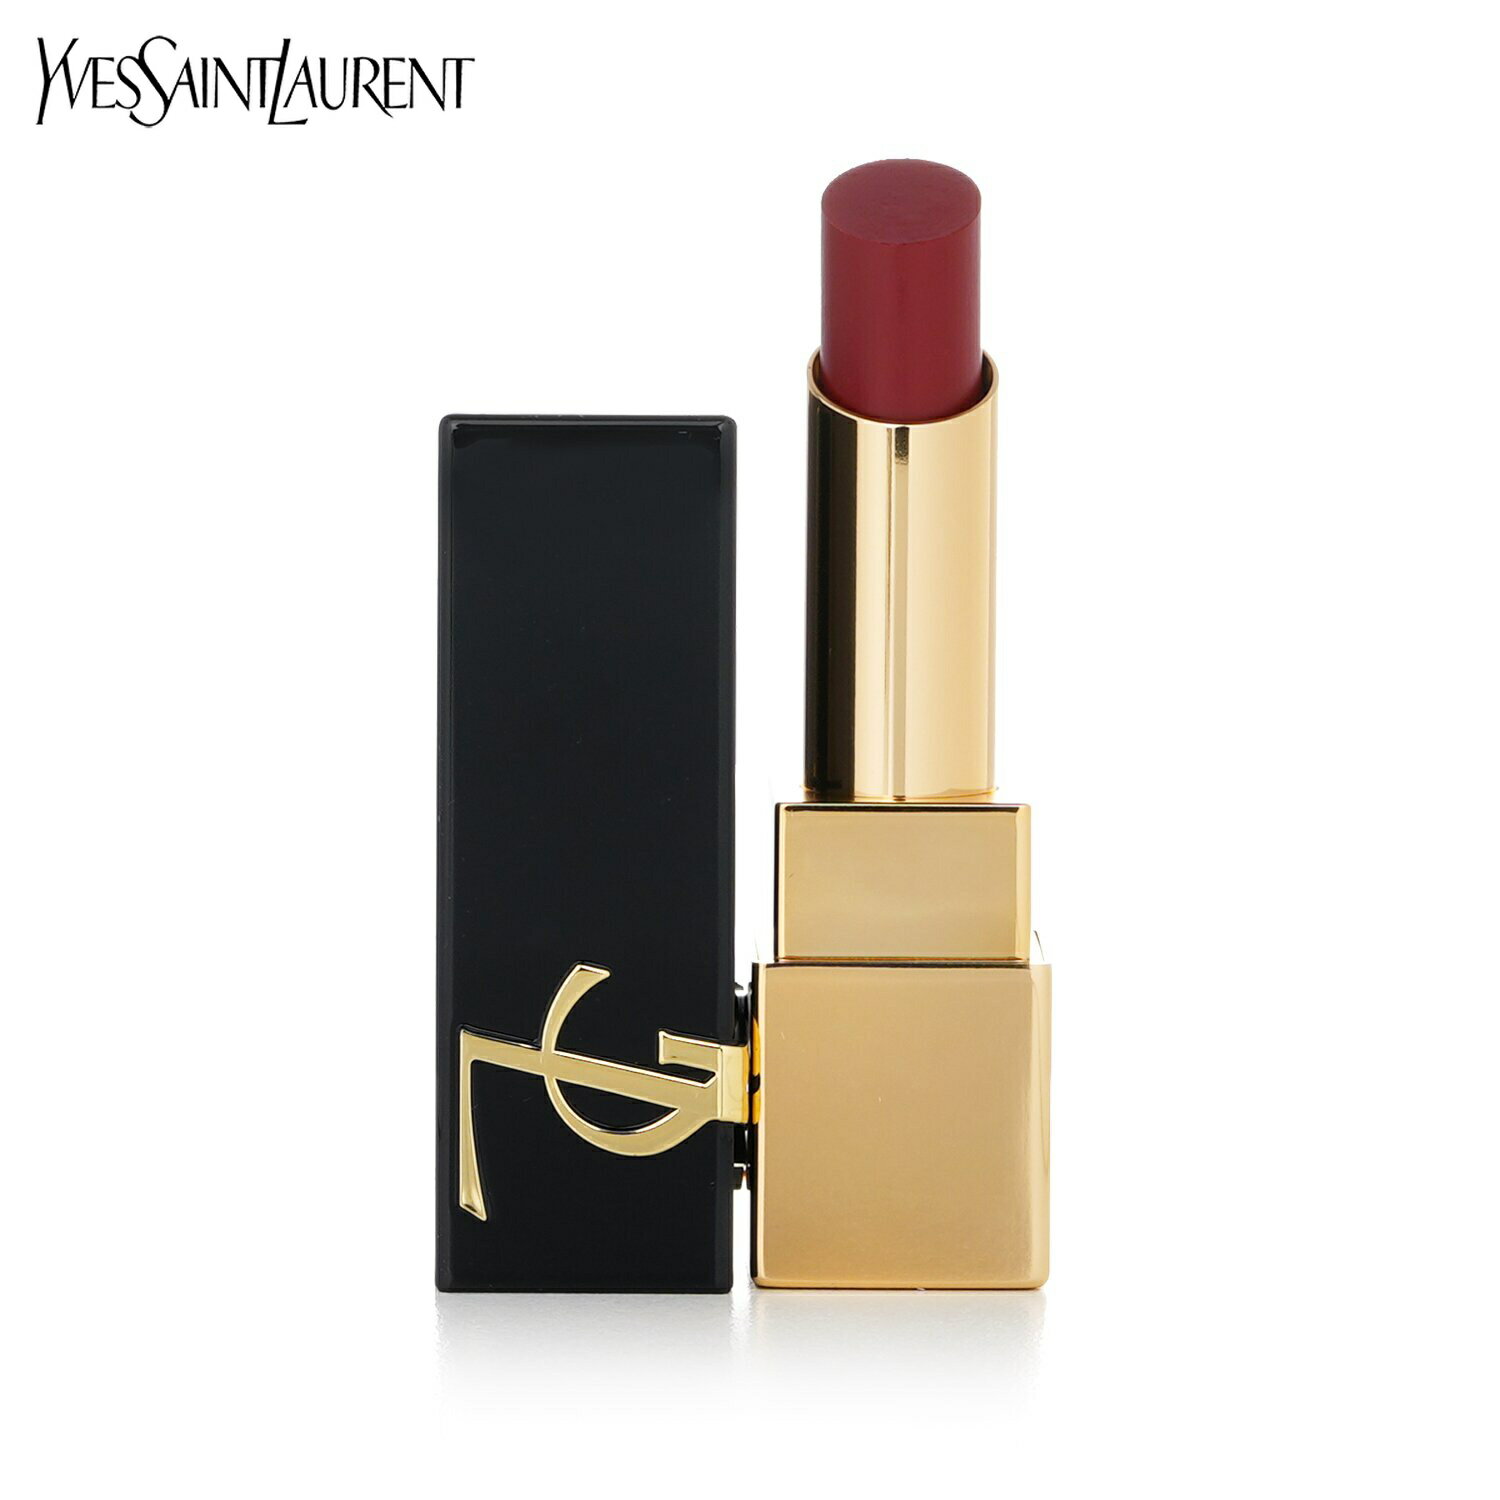 CT[ bvXeBbN Yves Saint Laurent g Rouge Pur Couture The Bold Lipstick - # 1971 Provocation 3g CNAbv bv ɂ ̓ v[g Mtg 2024 lC uh RX